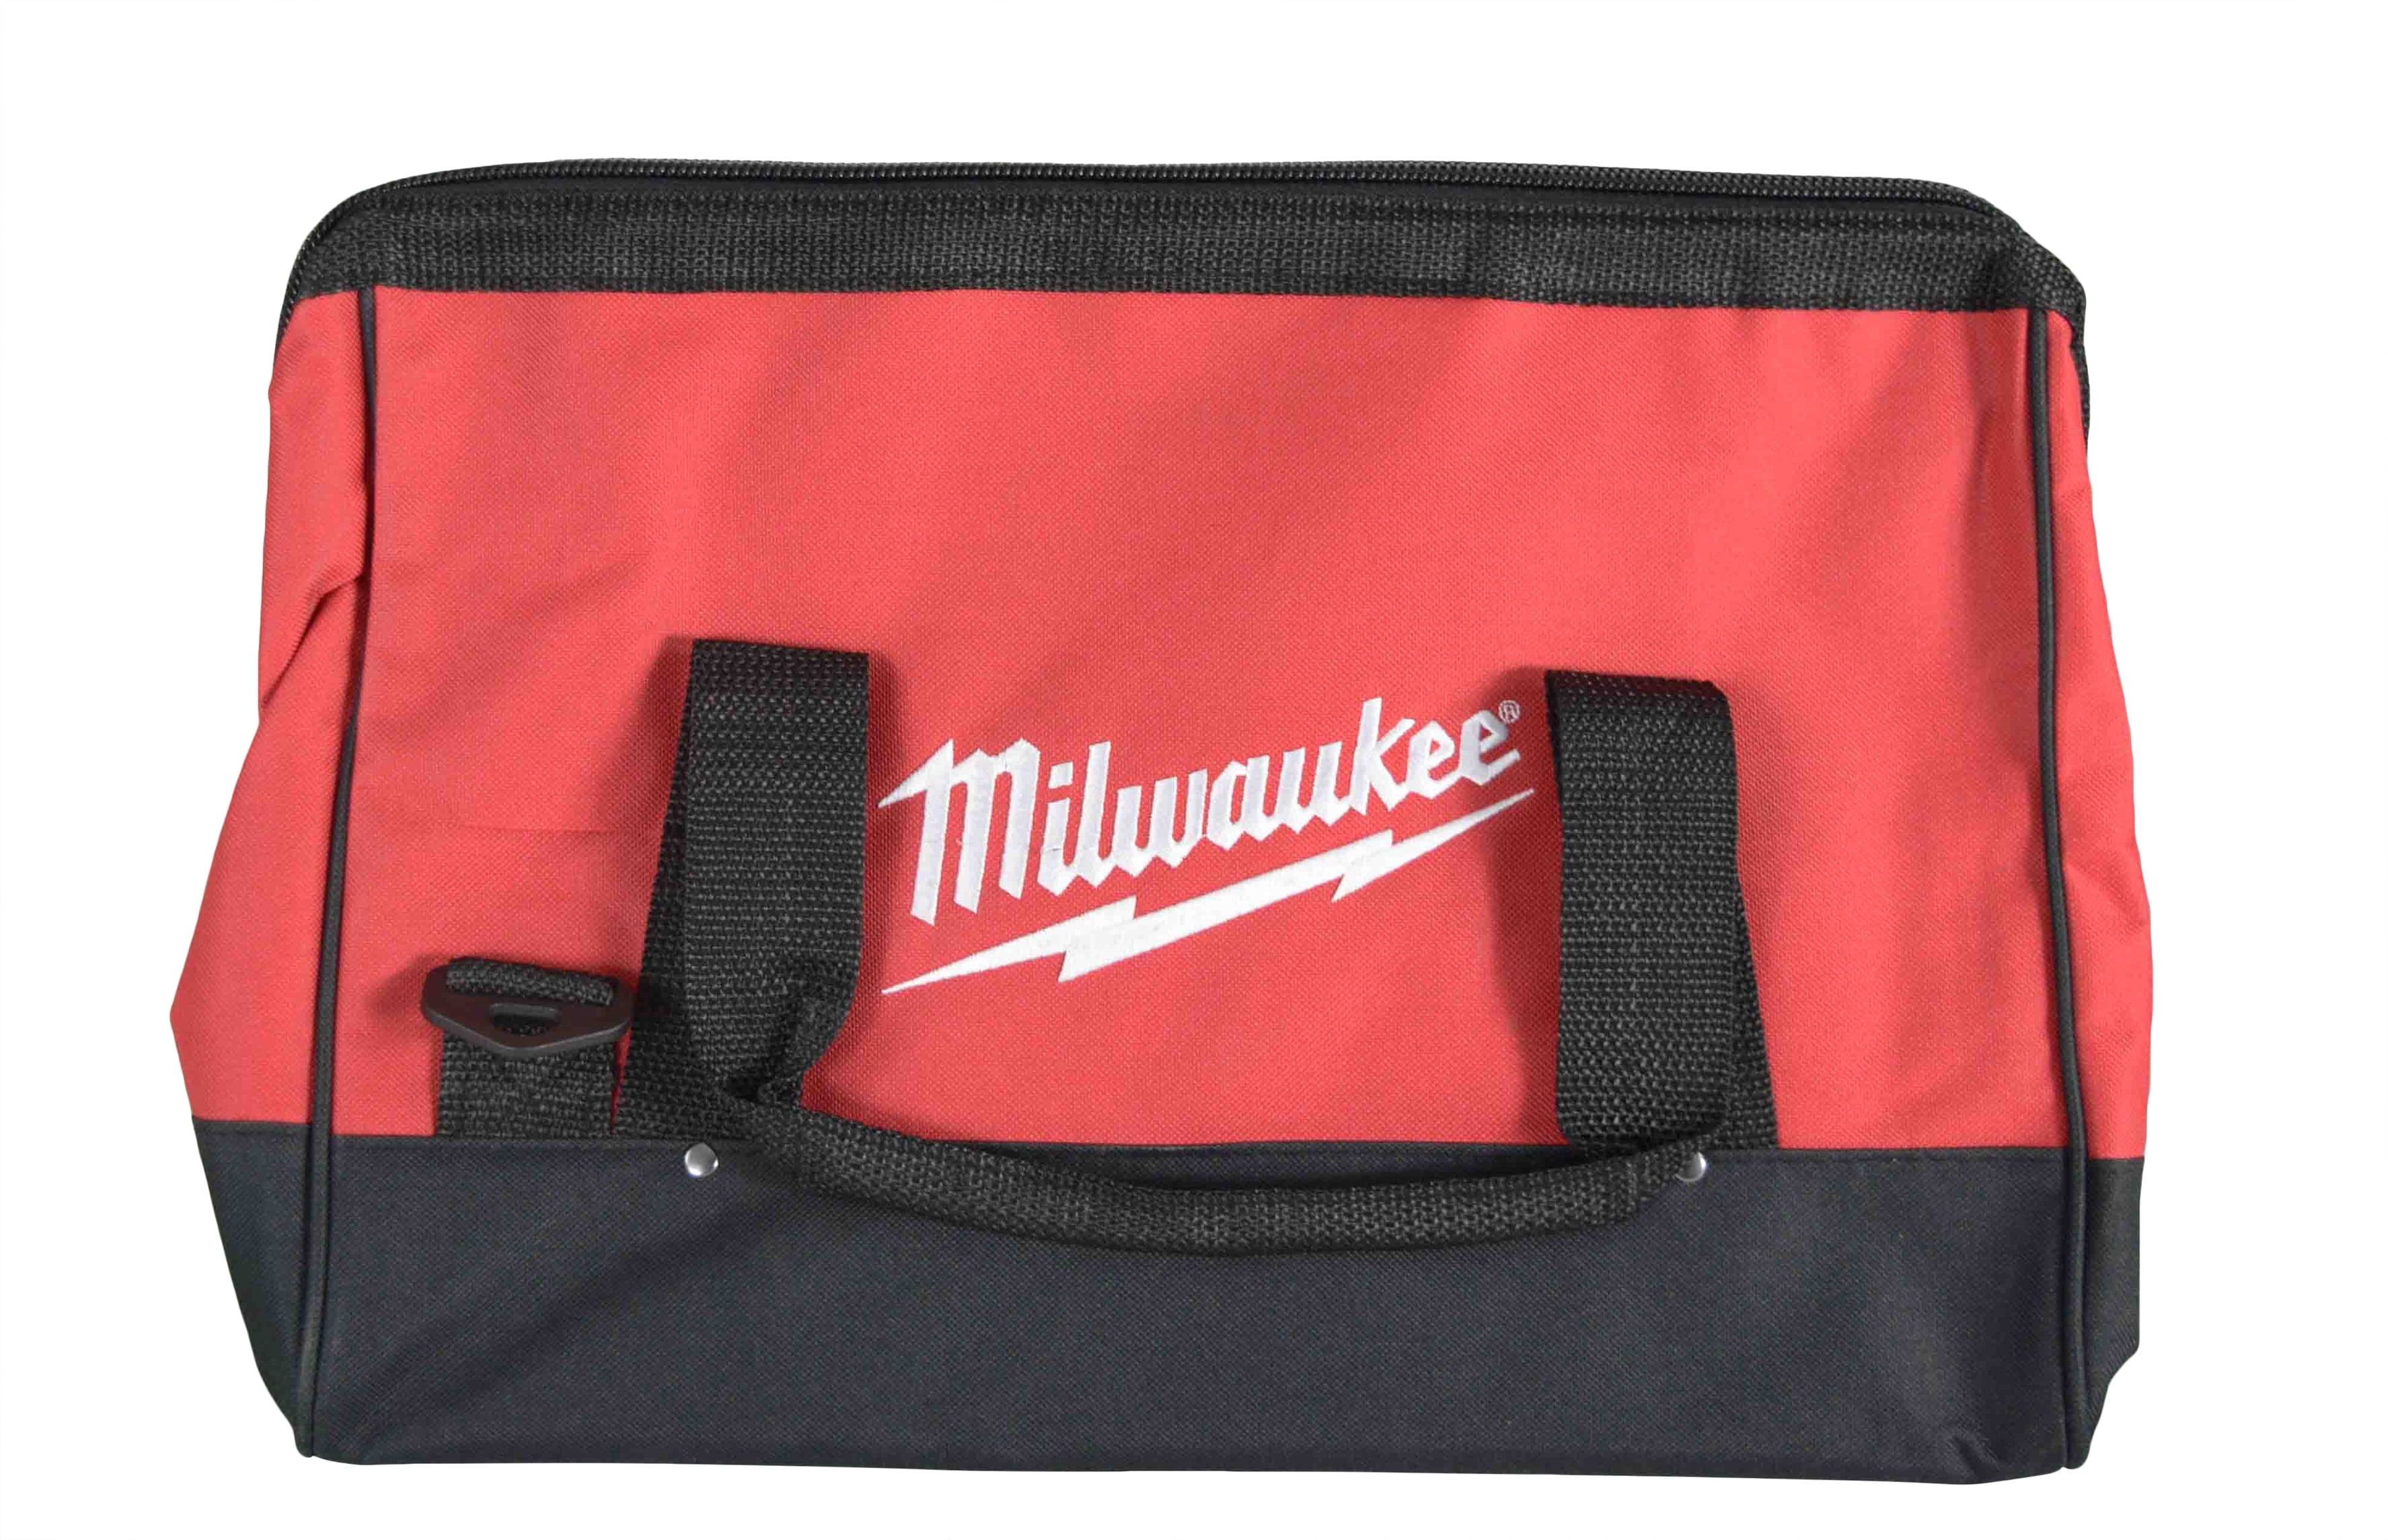 New Milwaukee Heavy Duty Contractors Tool Bag M18 M12 11" x 10" x 8" 